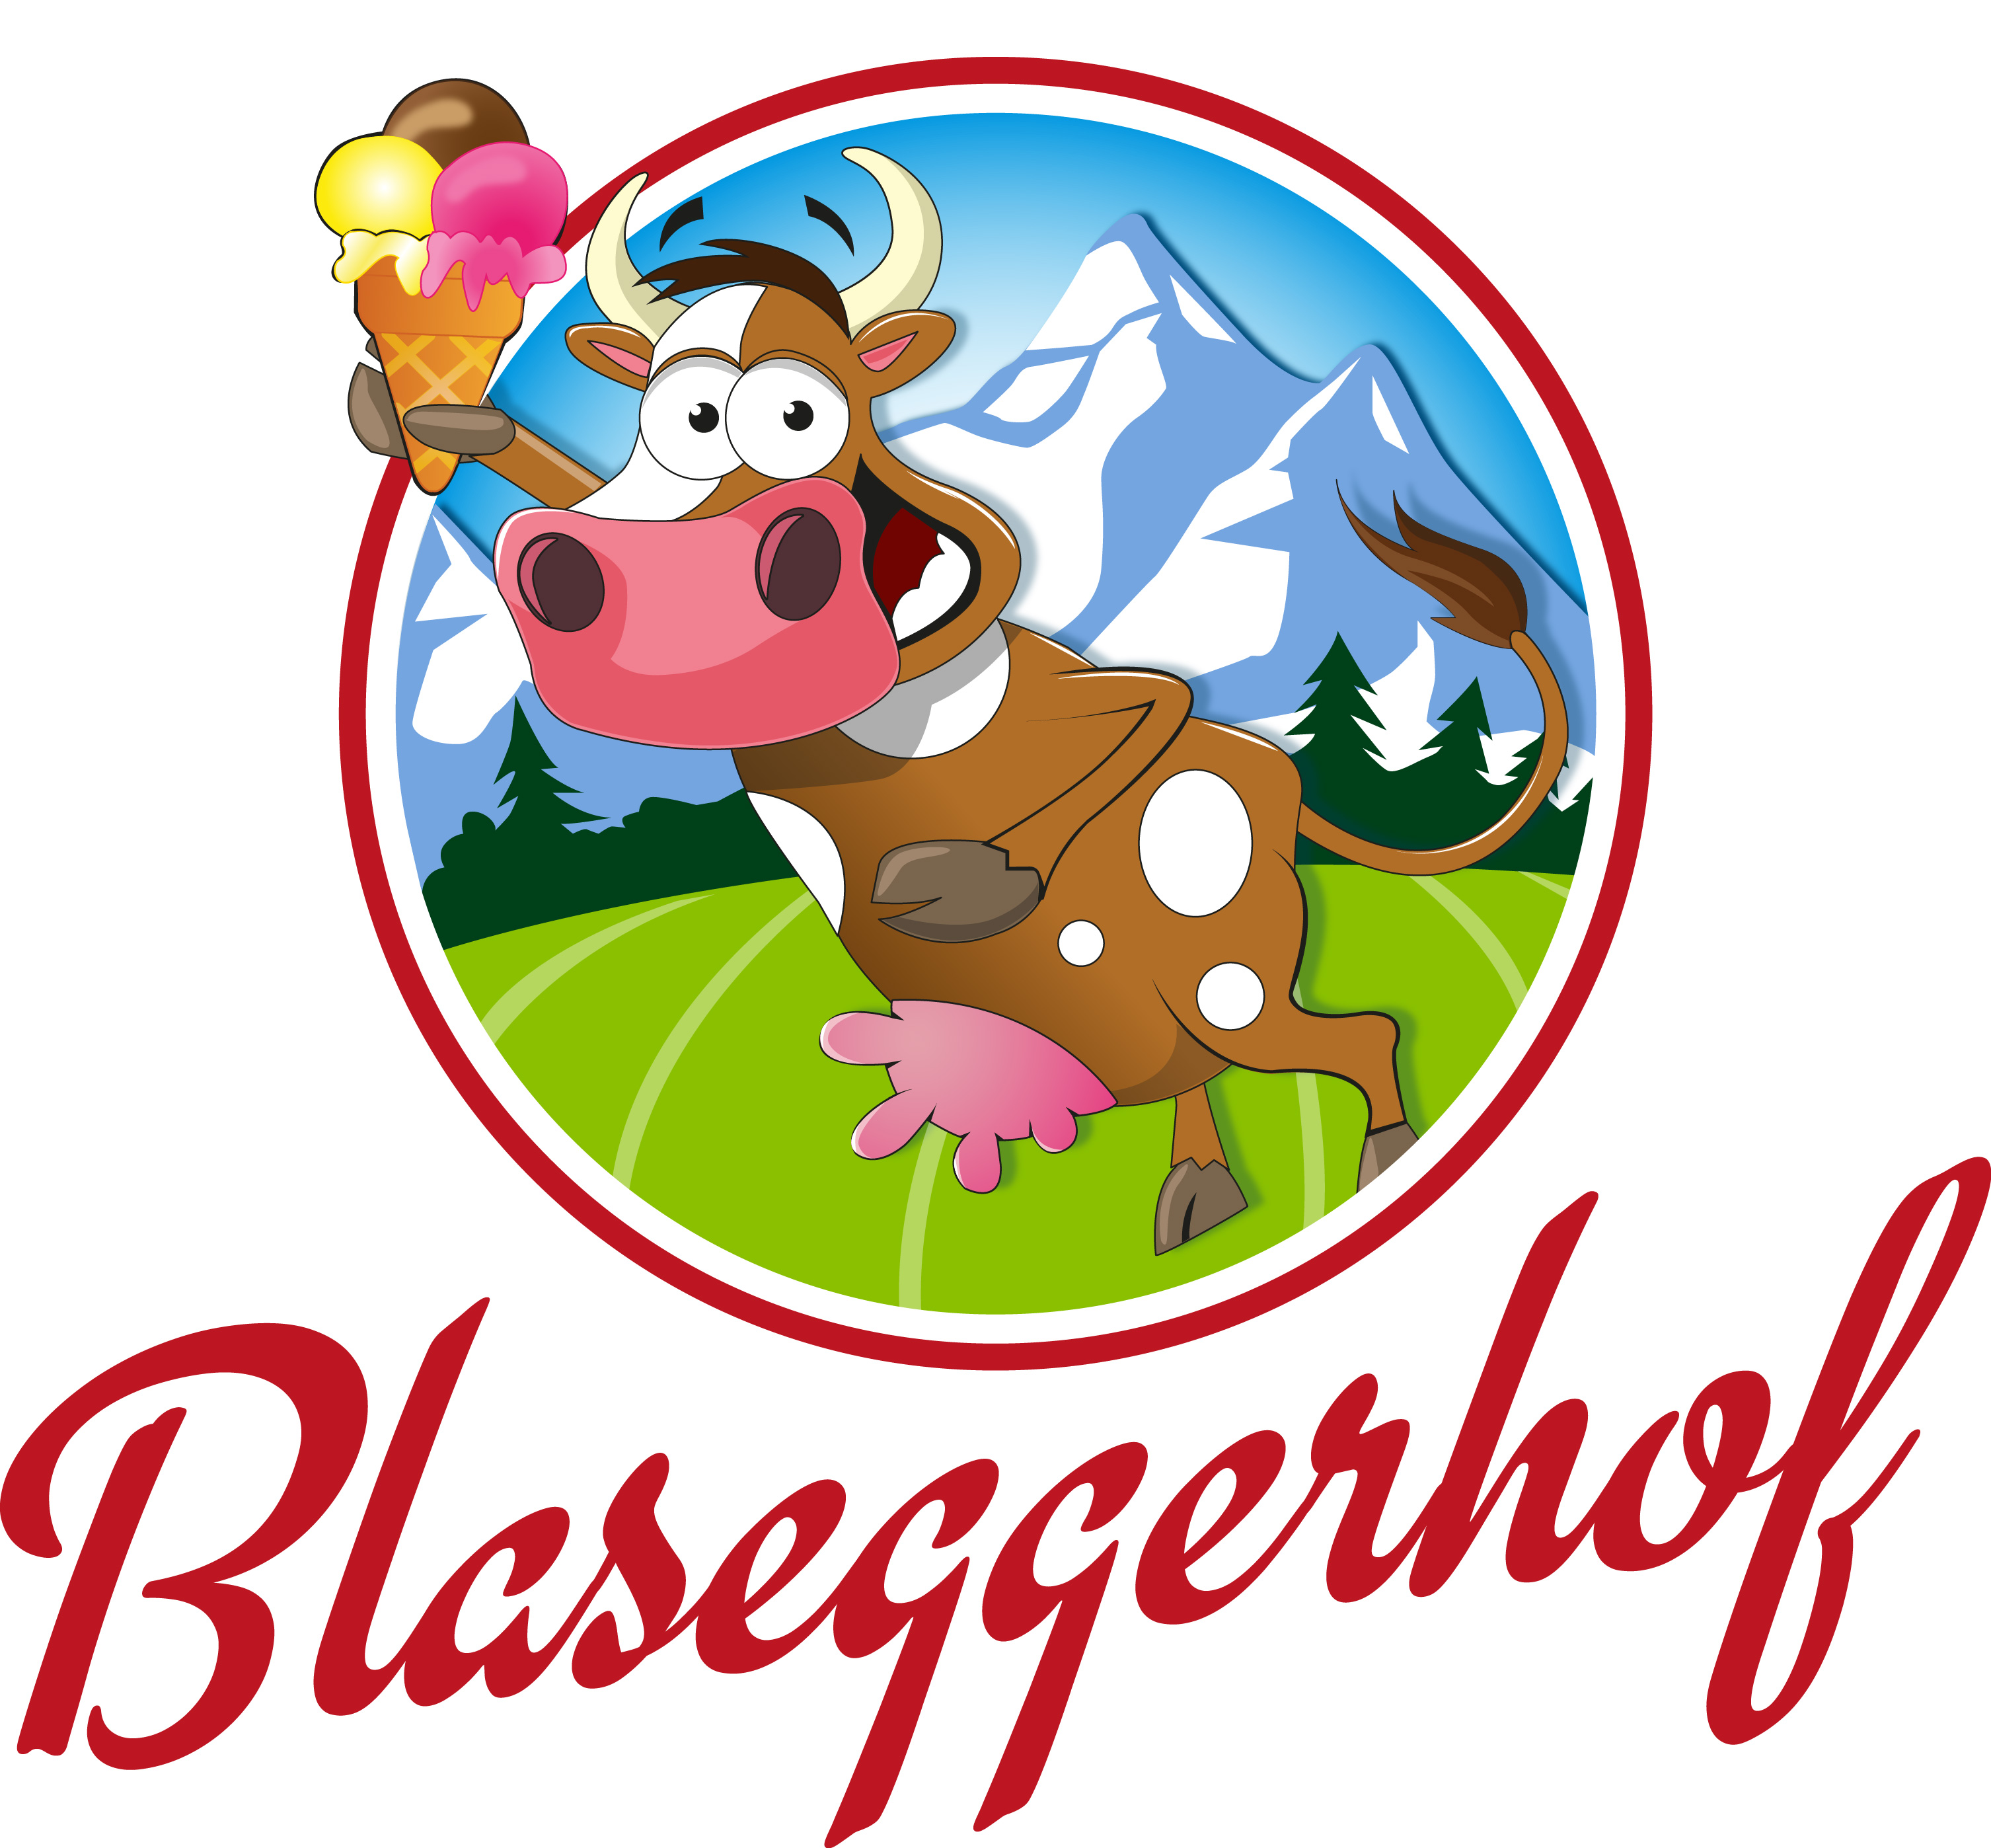 (c) Blaseggerhof.com